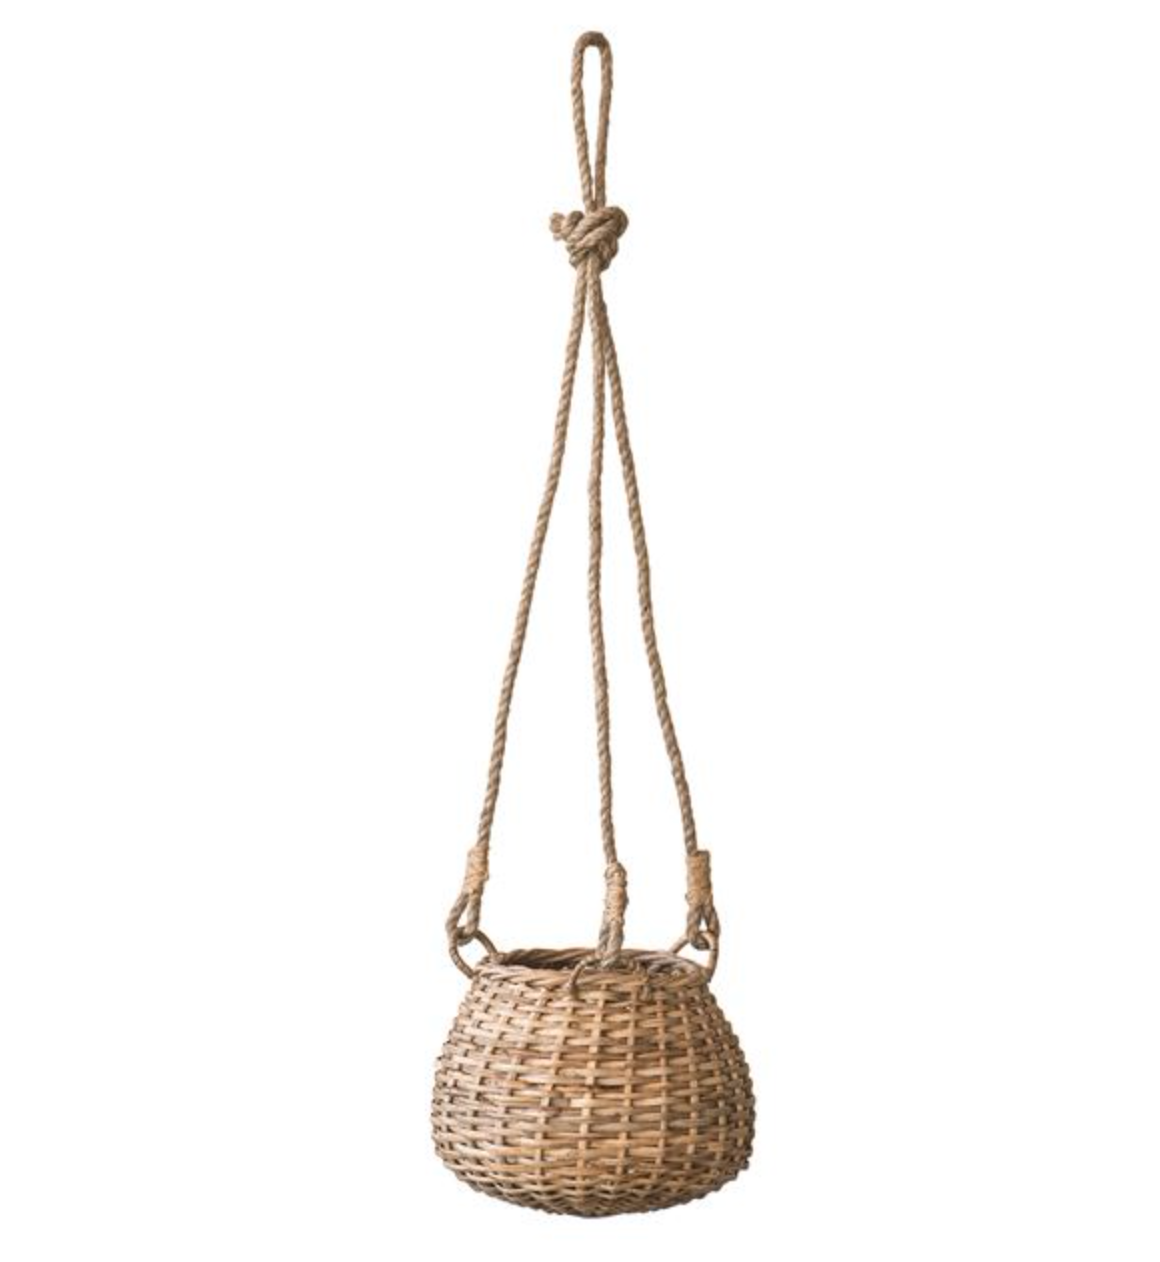 Woven Hanging Rattan Basket